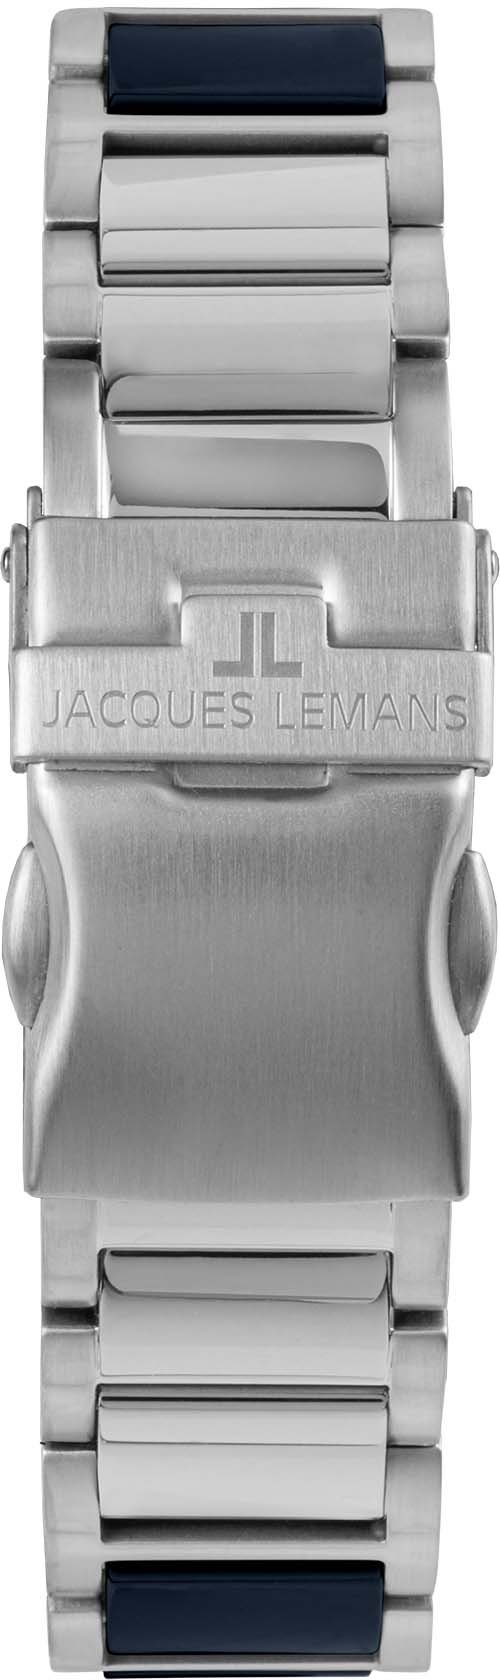 42-12B Keramikuhr Lemans Jacques Liverpool, dunkelblau